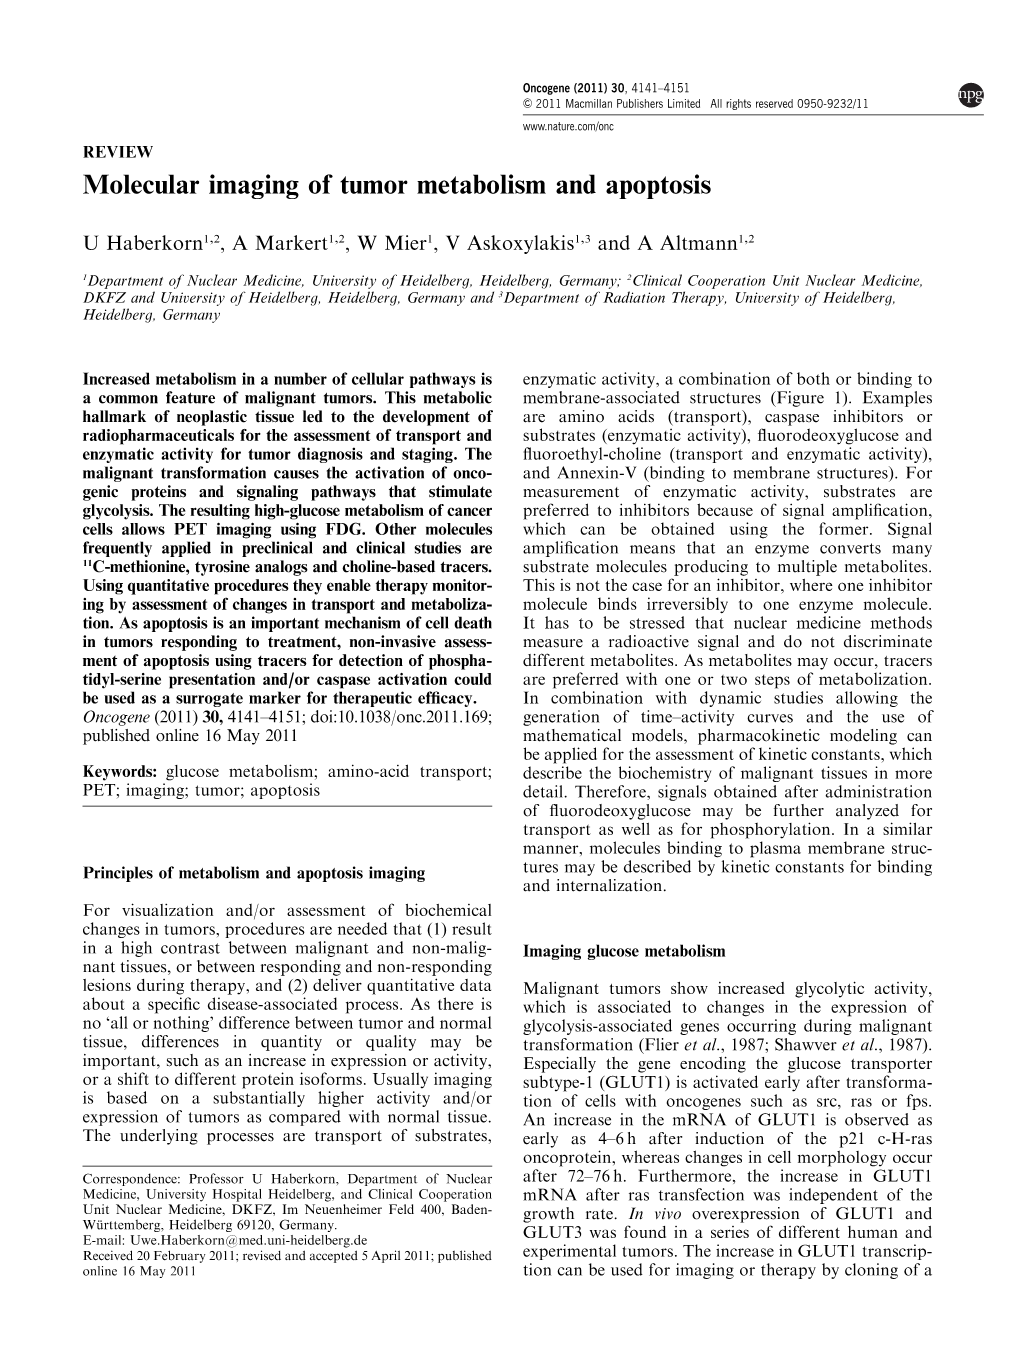 Molecular Imaging of Tumor Metabolism and Apoptosis